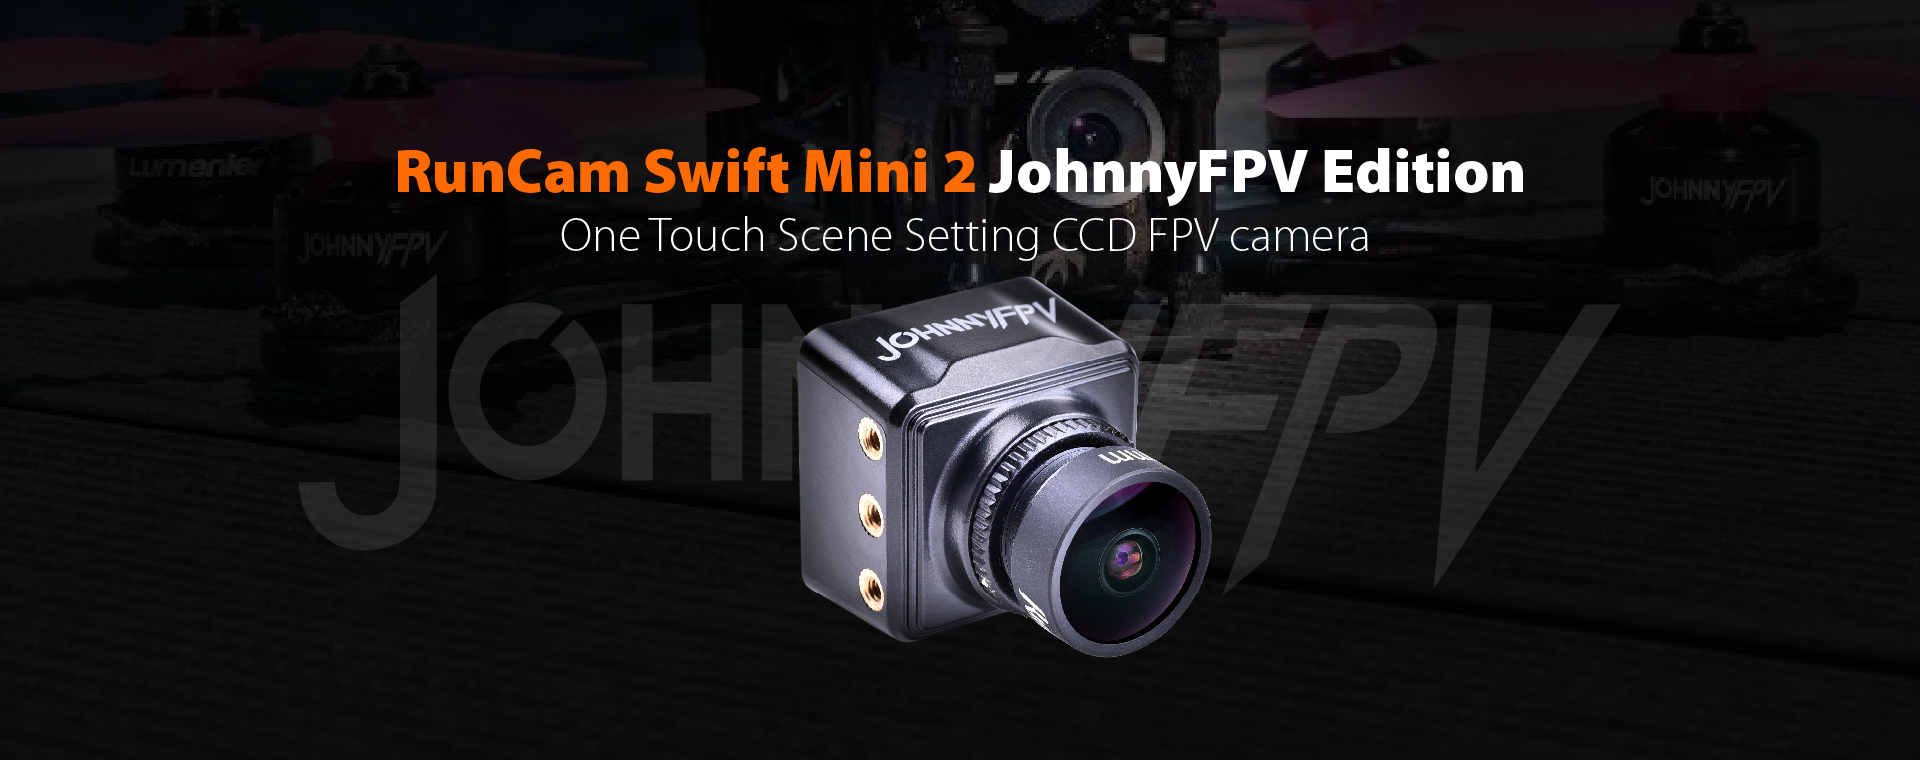 RunCam Swift Mini 2 JohnnyFPV Edition